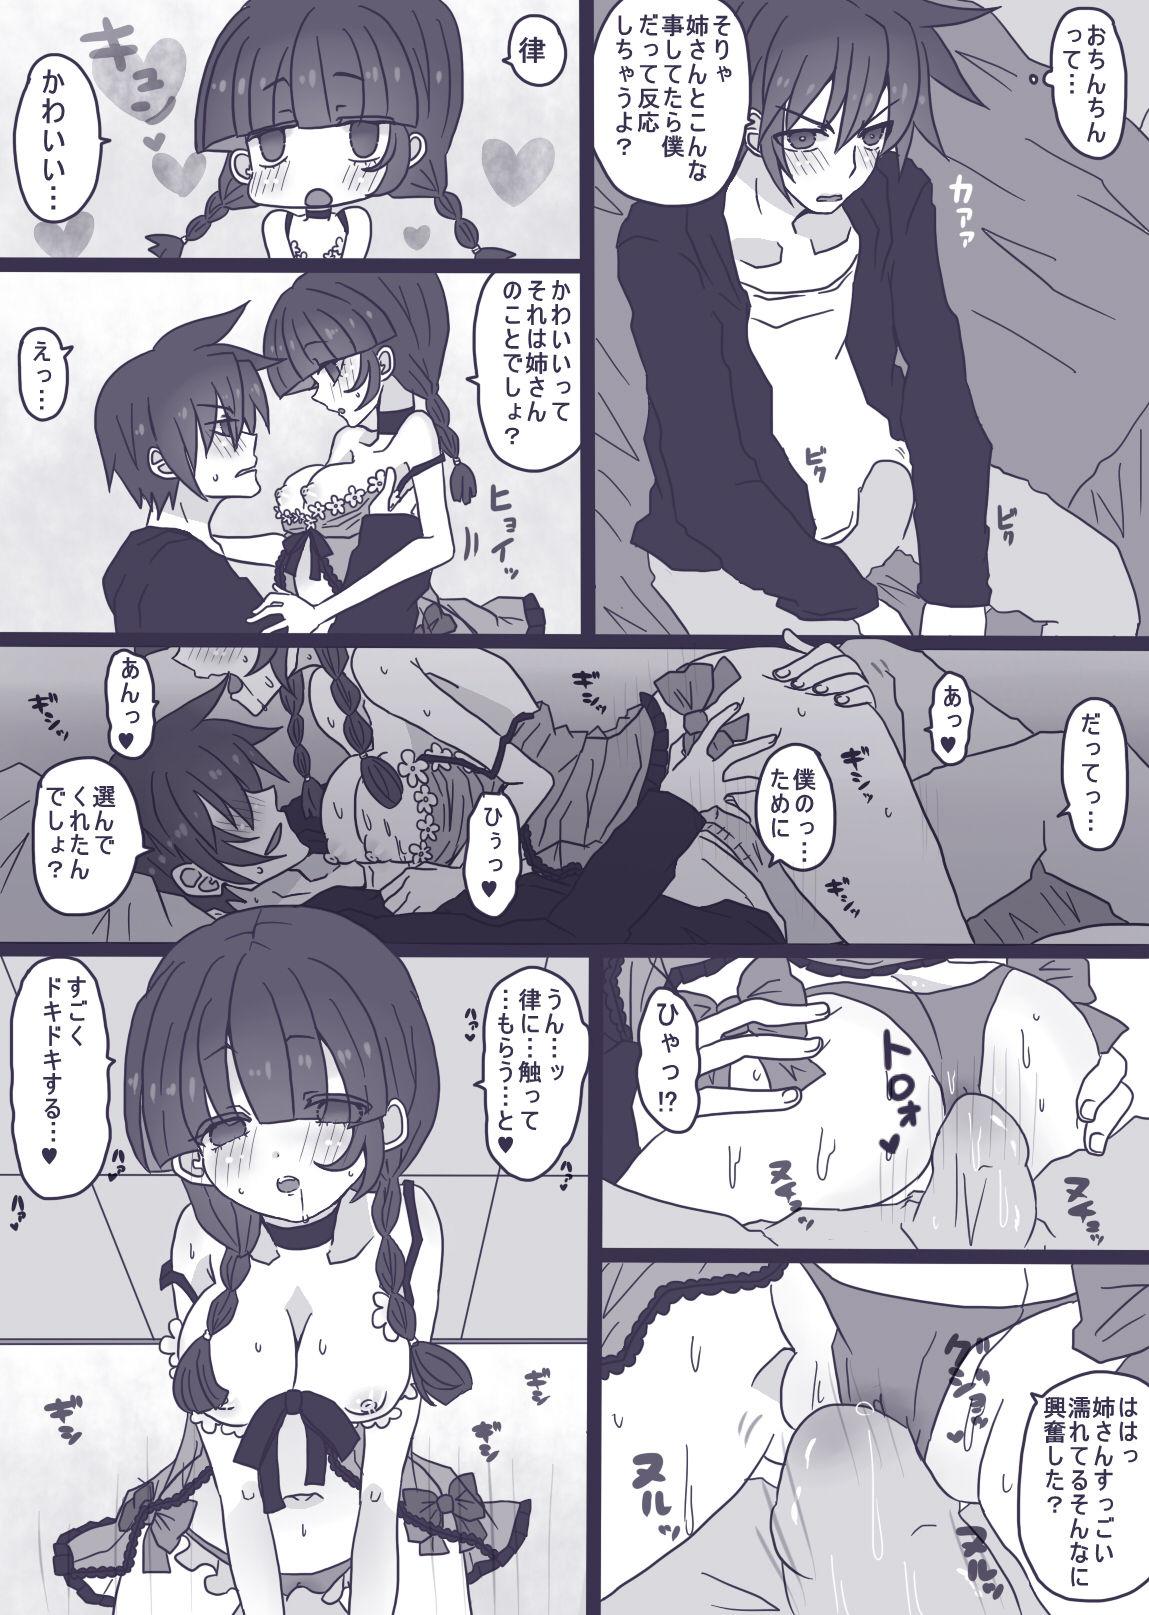 Mum 霊モブ・律モブ漫画 - Mob psycho 100 8teenxxx - Page 6